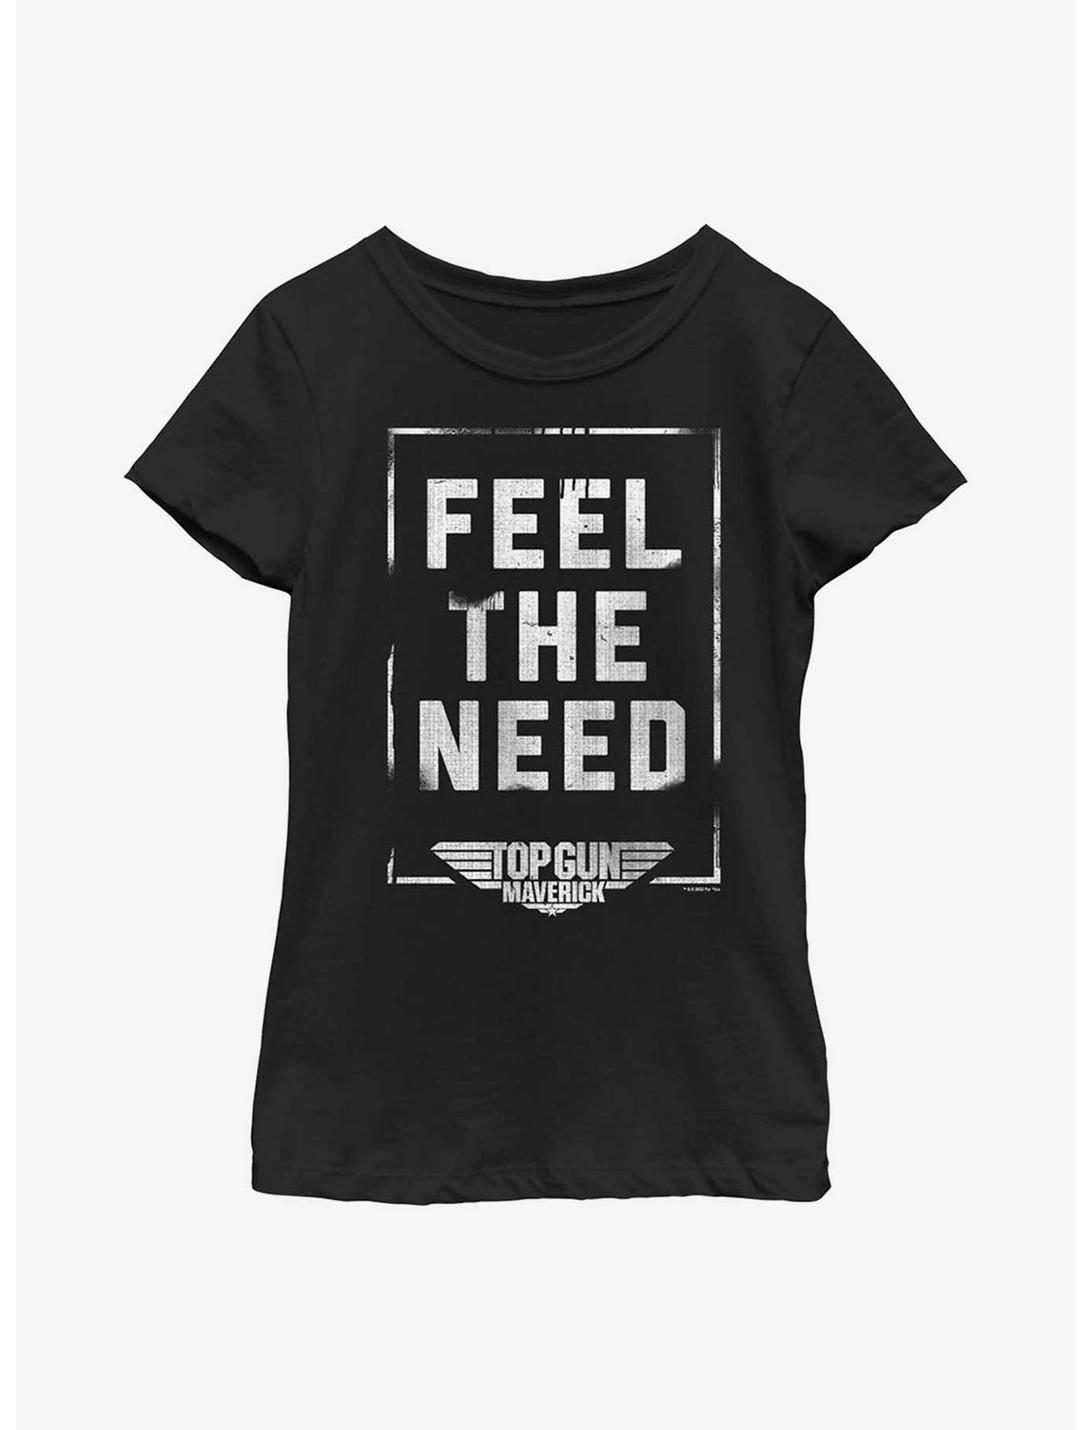 Top Gun: Maverick Feel The Need Youth Girls T-Shirt, BLACK, hi-res